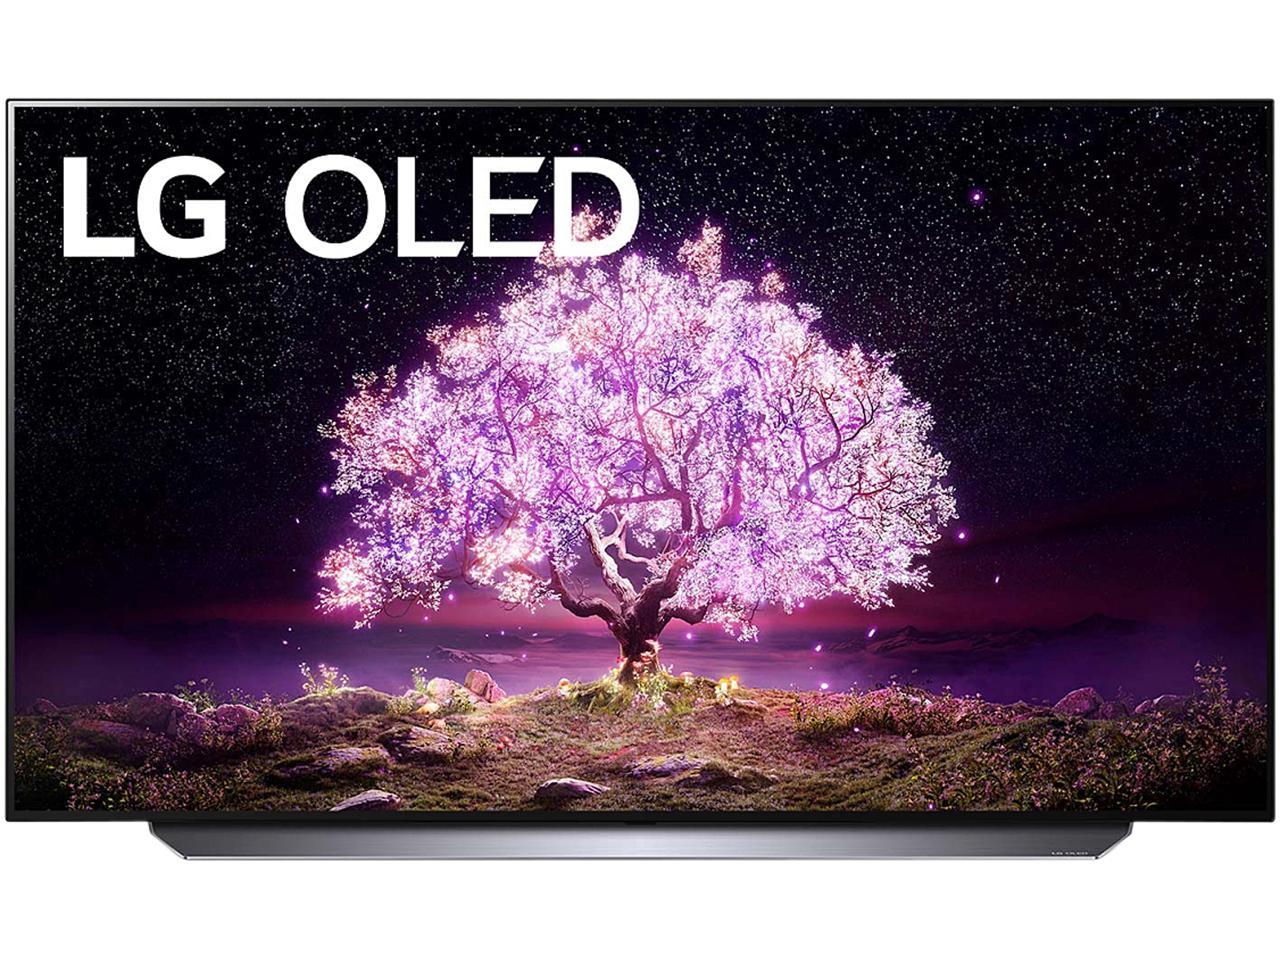 65" LG OLED65C1 4K OLED TV + $150 VISA GC + 4 Year Warranty w/ Burn In Coverage +Nvidia Ge-Force Streaming Credit for $1596.99 + FS